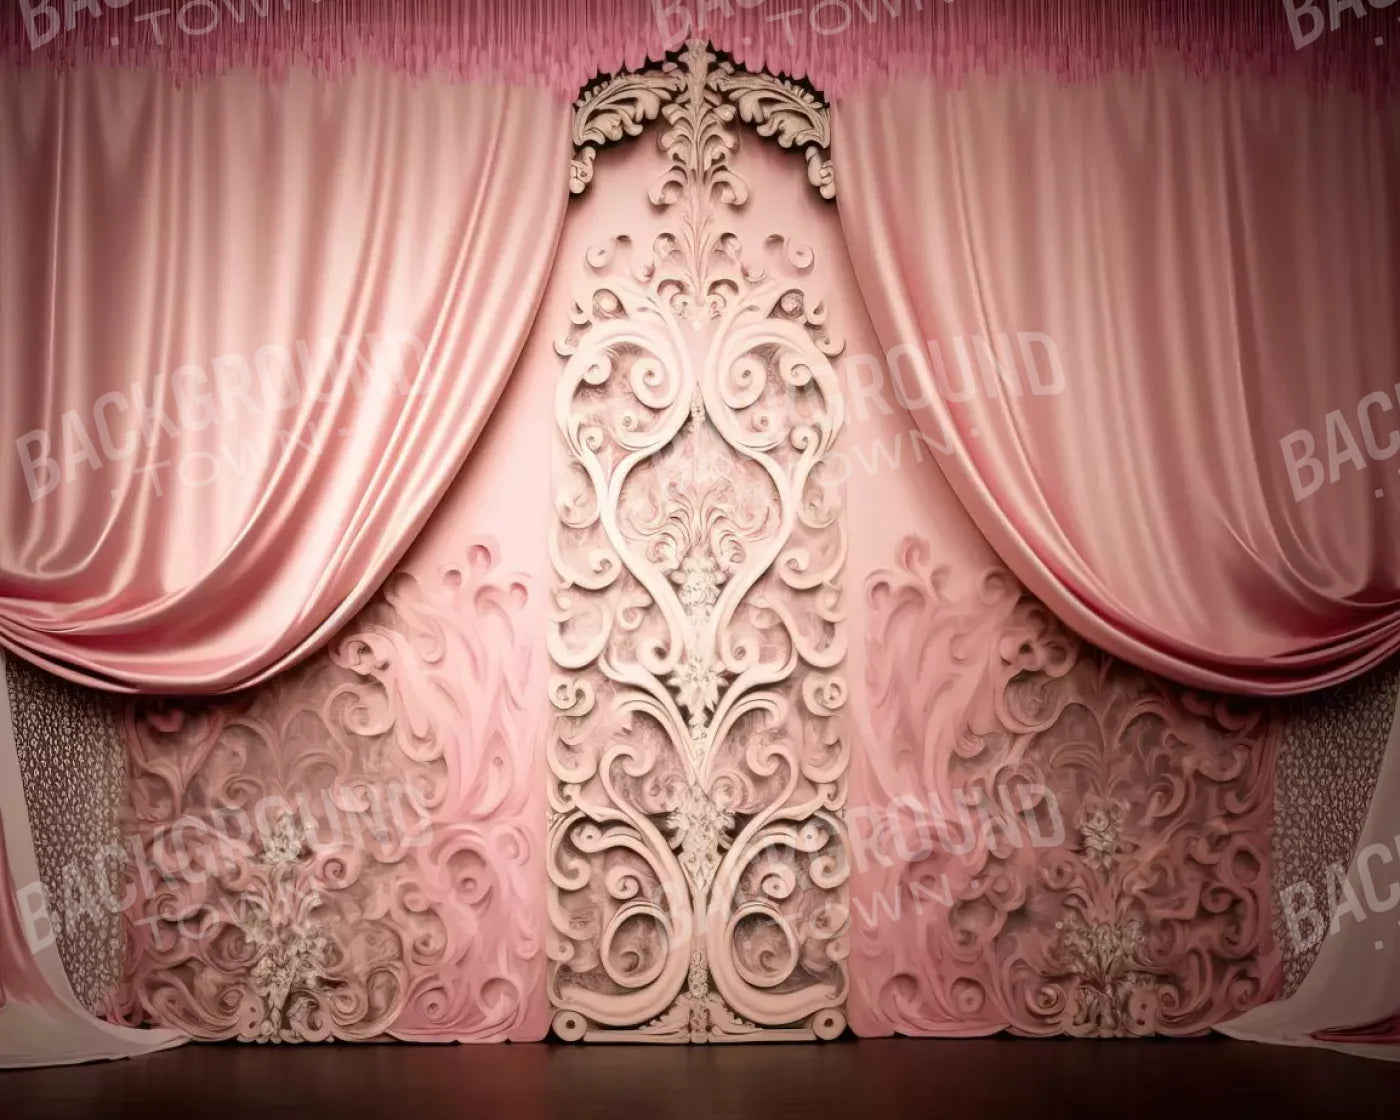 Doll House Curtains Iii 10’X8’ Fleece (120 X 96 Inch) Backdrop